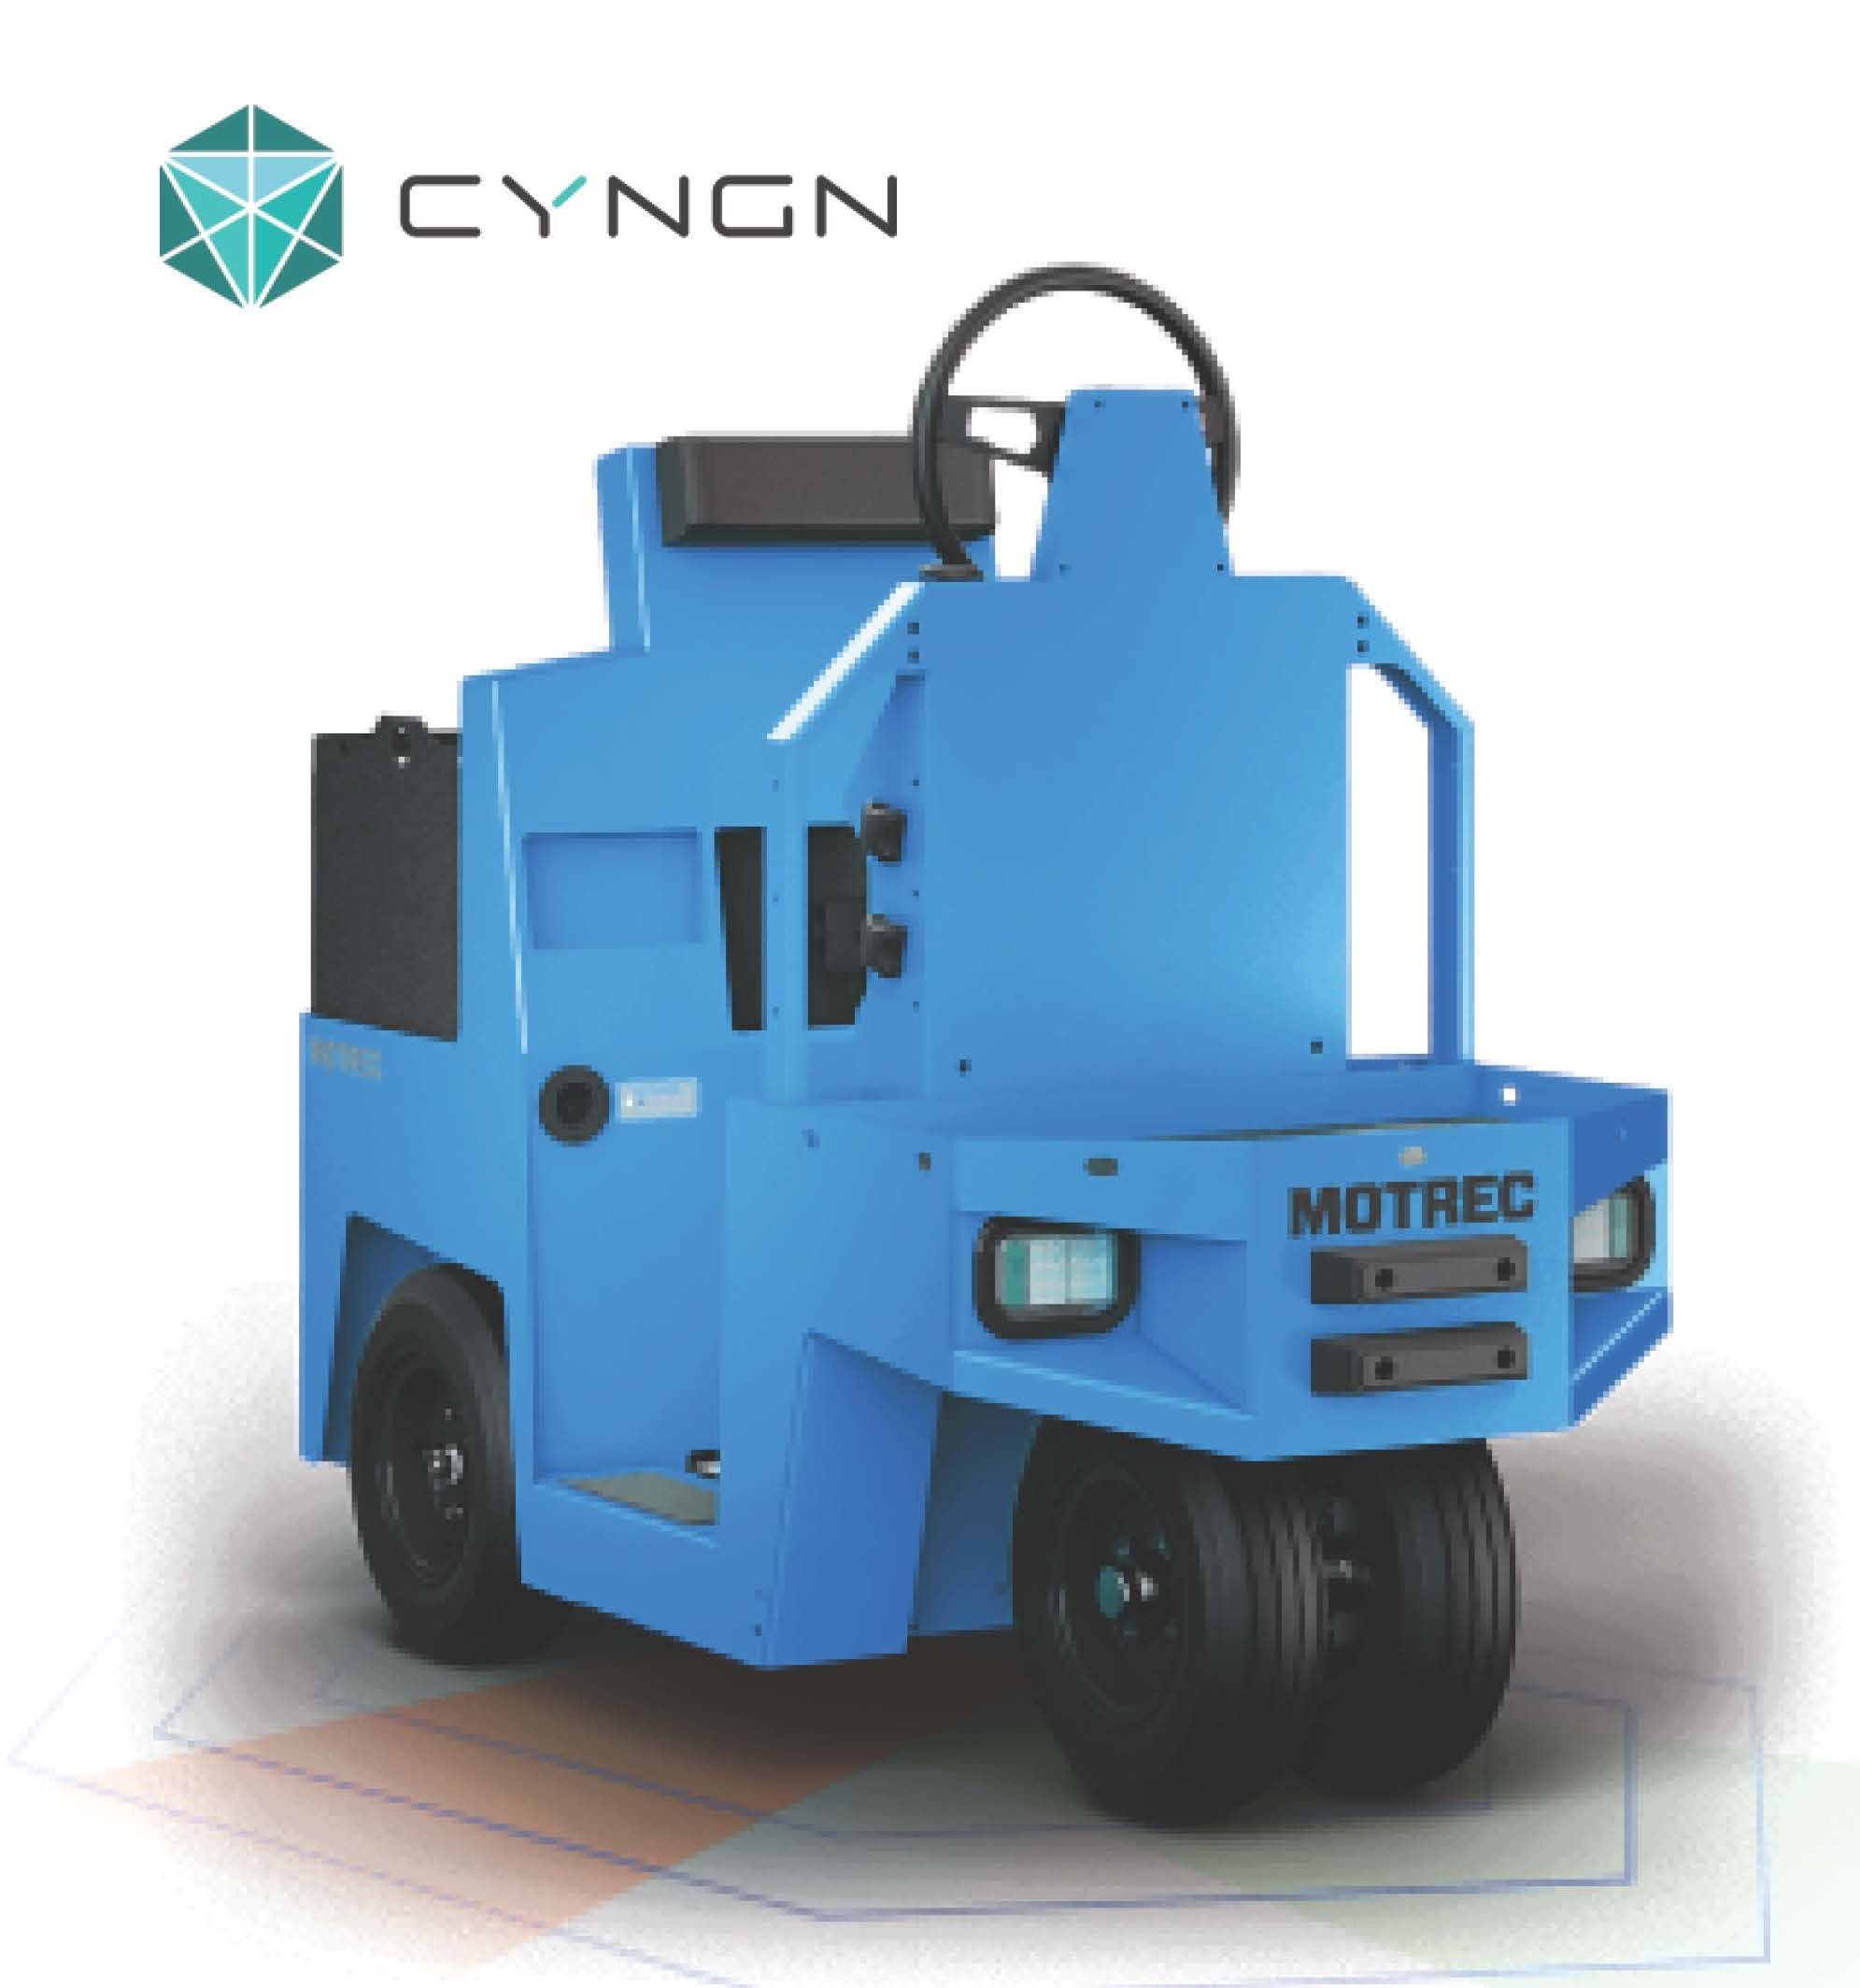 CYNGN
AI-POWERED AUTONOMOUS
Tugging with MOTREC